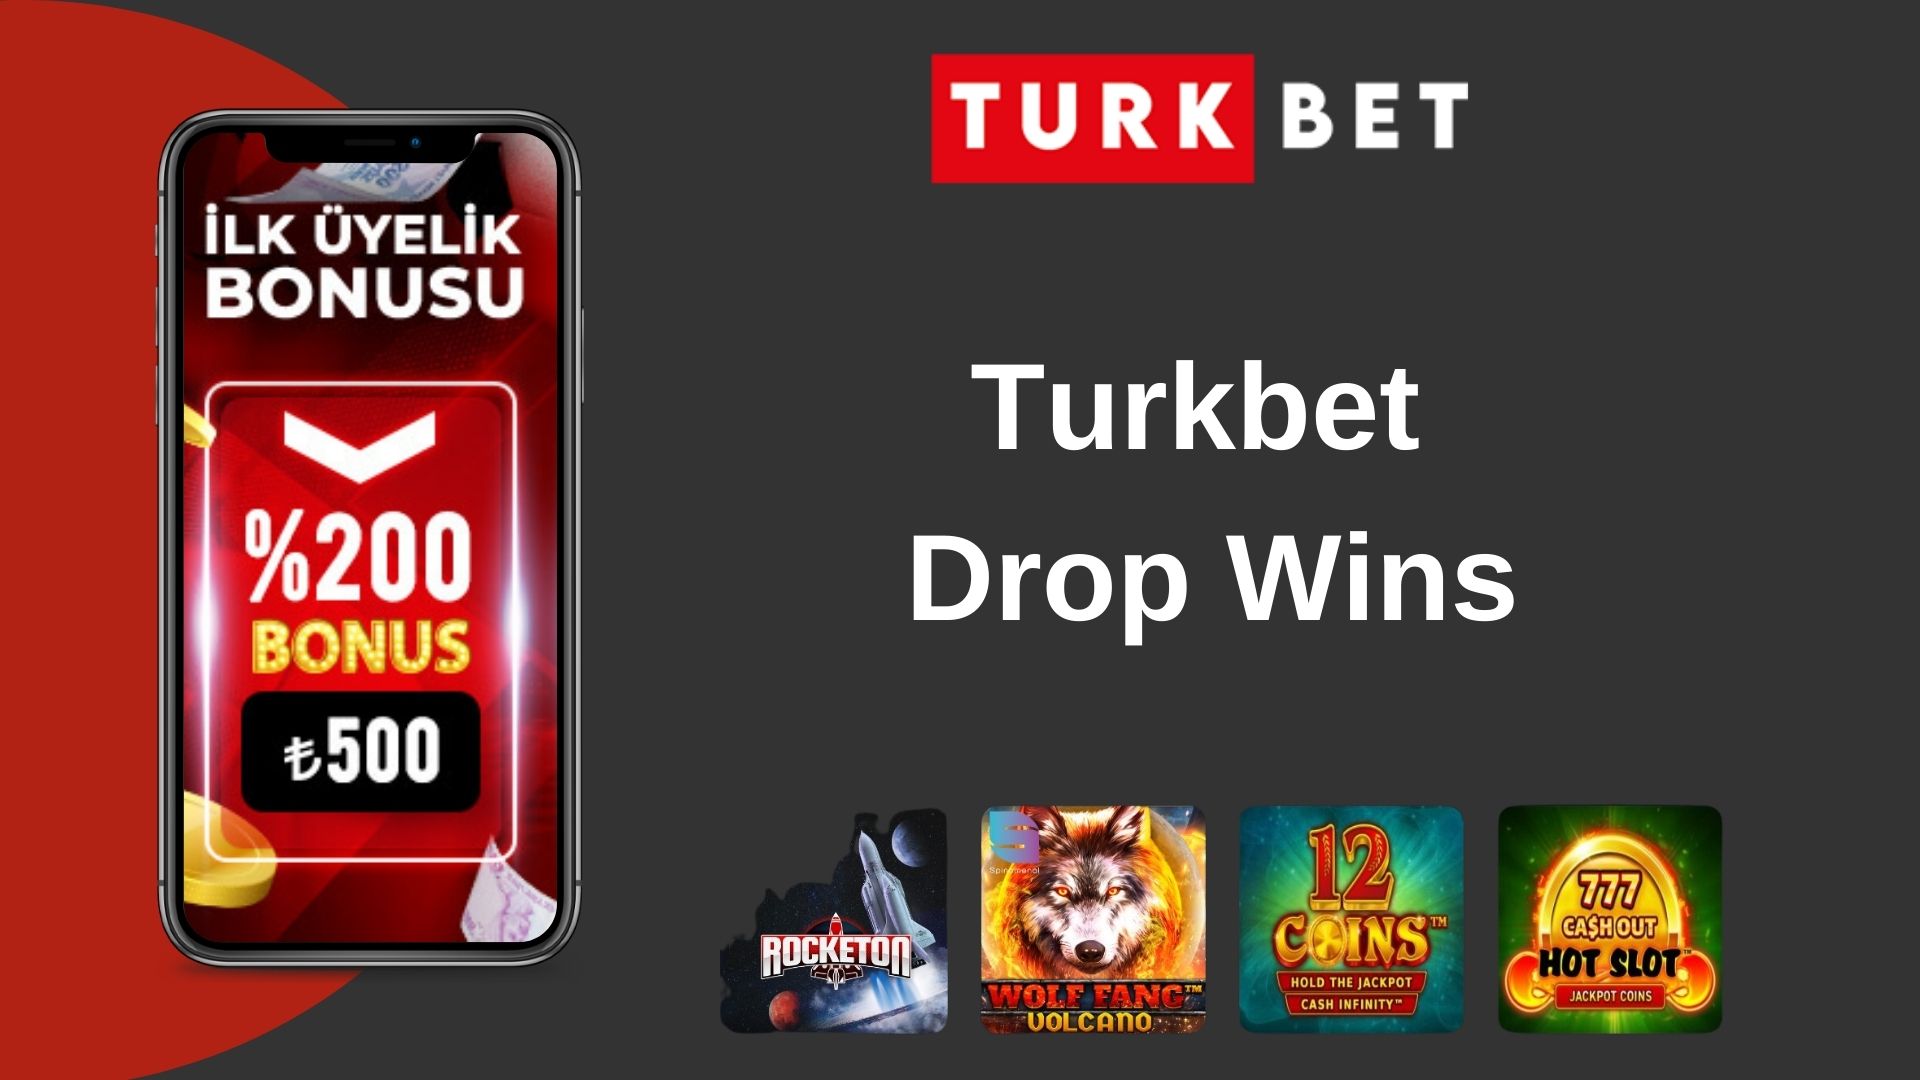 Turkbet Drop Wins